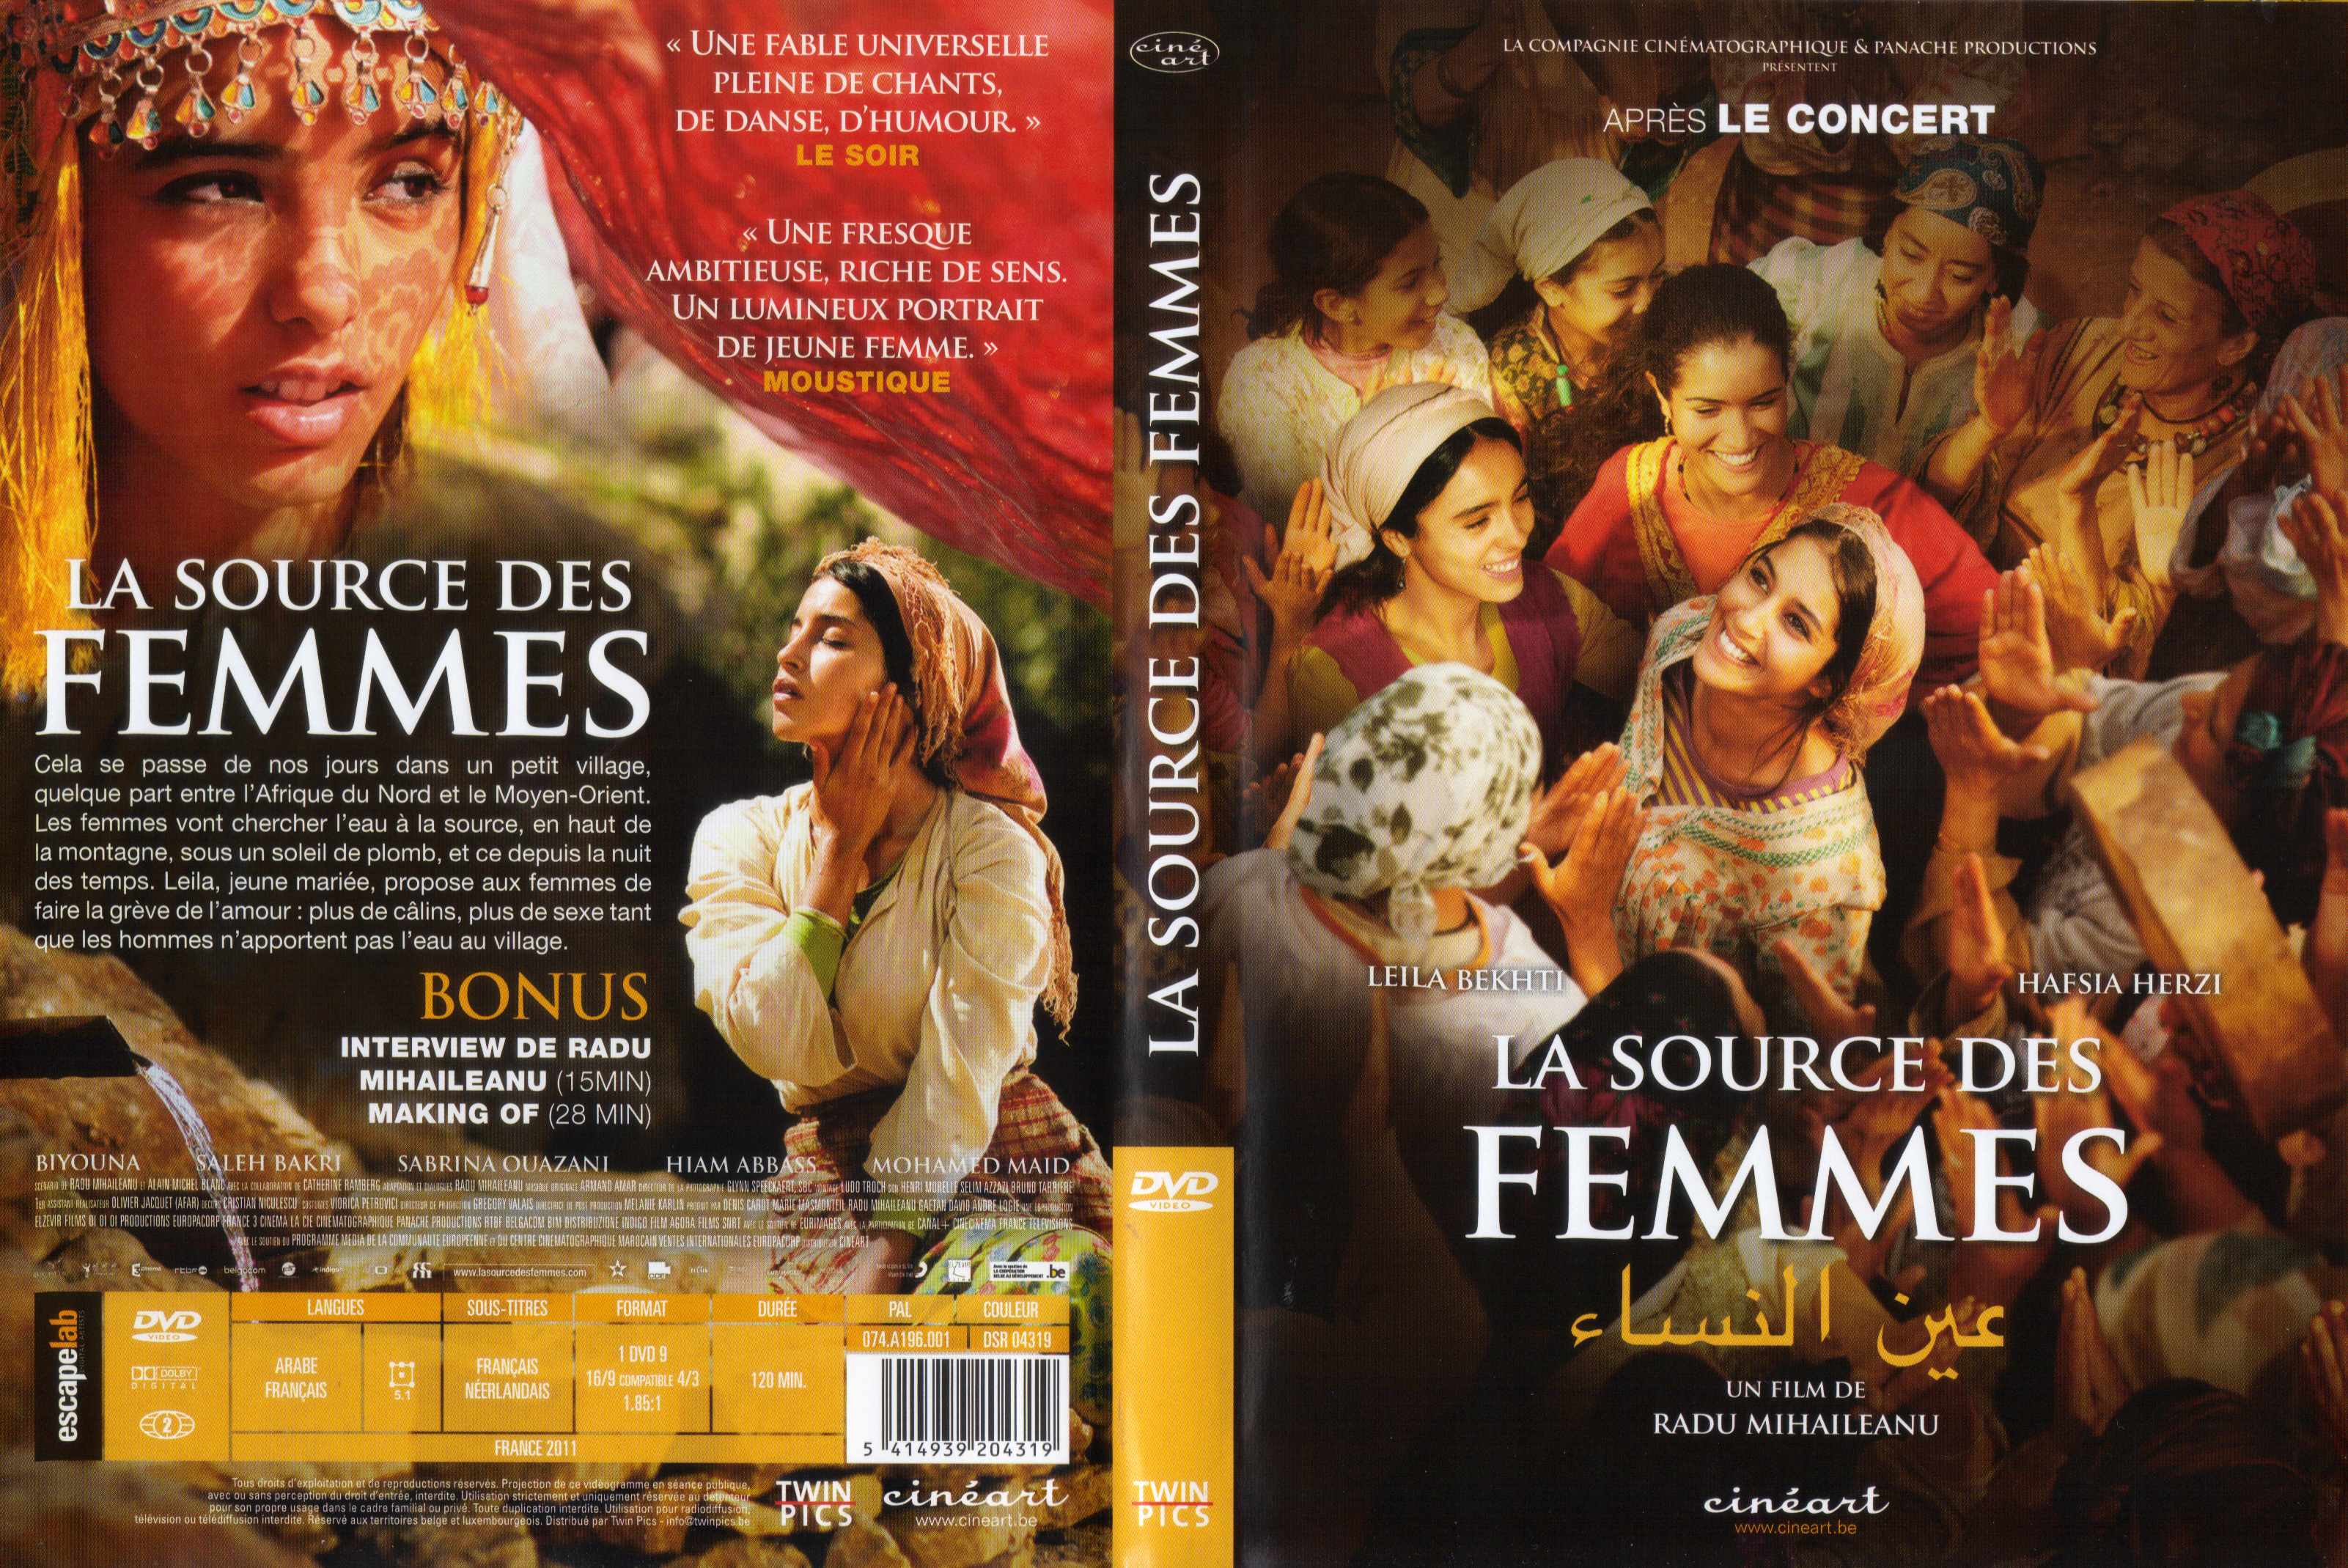 Jaquette DVD La source des femmes v3